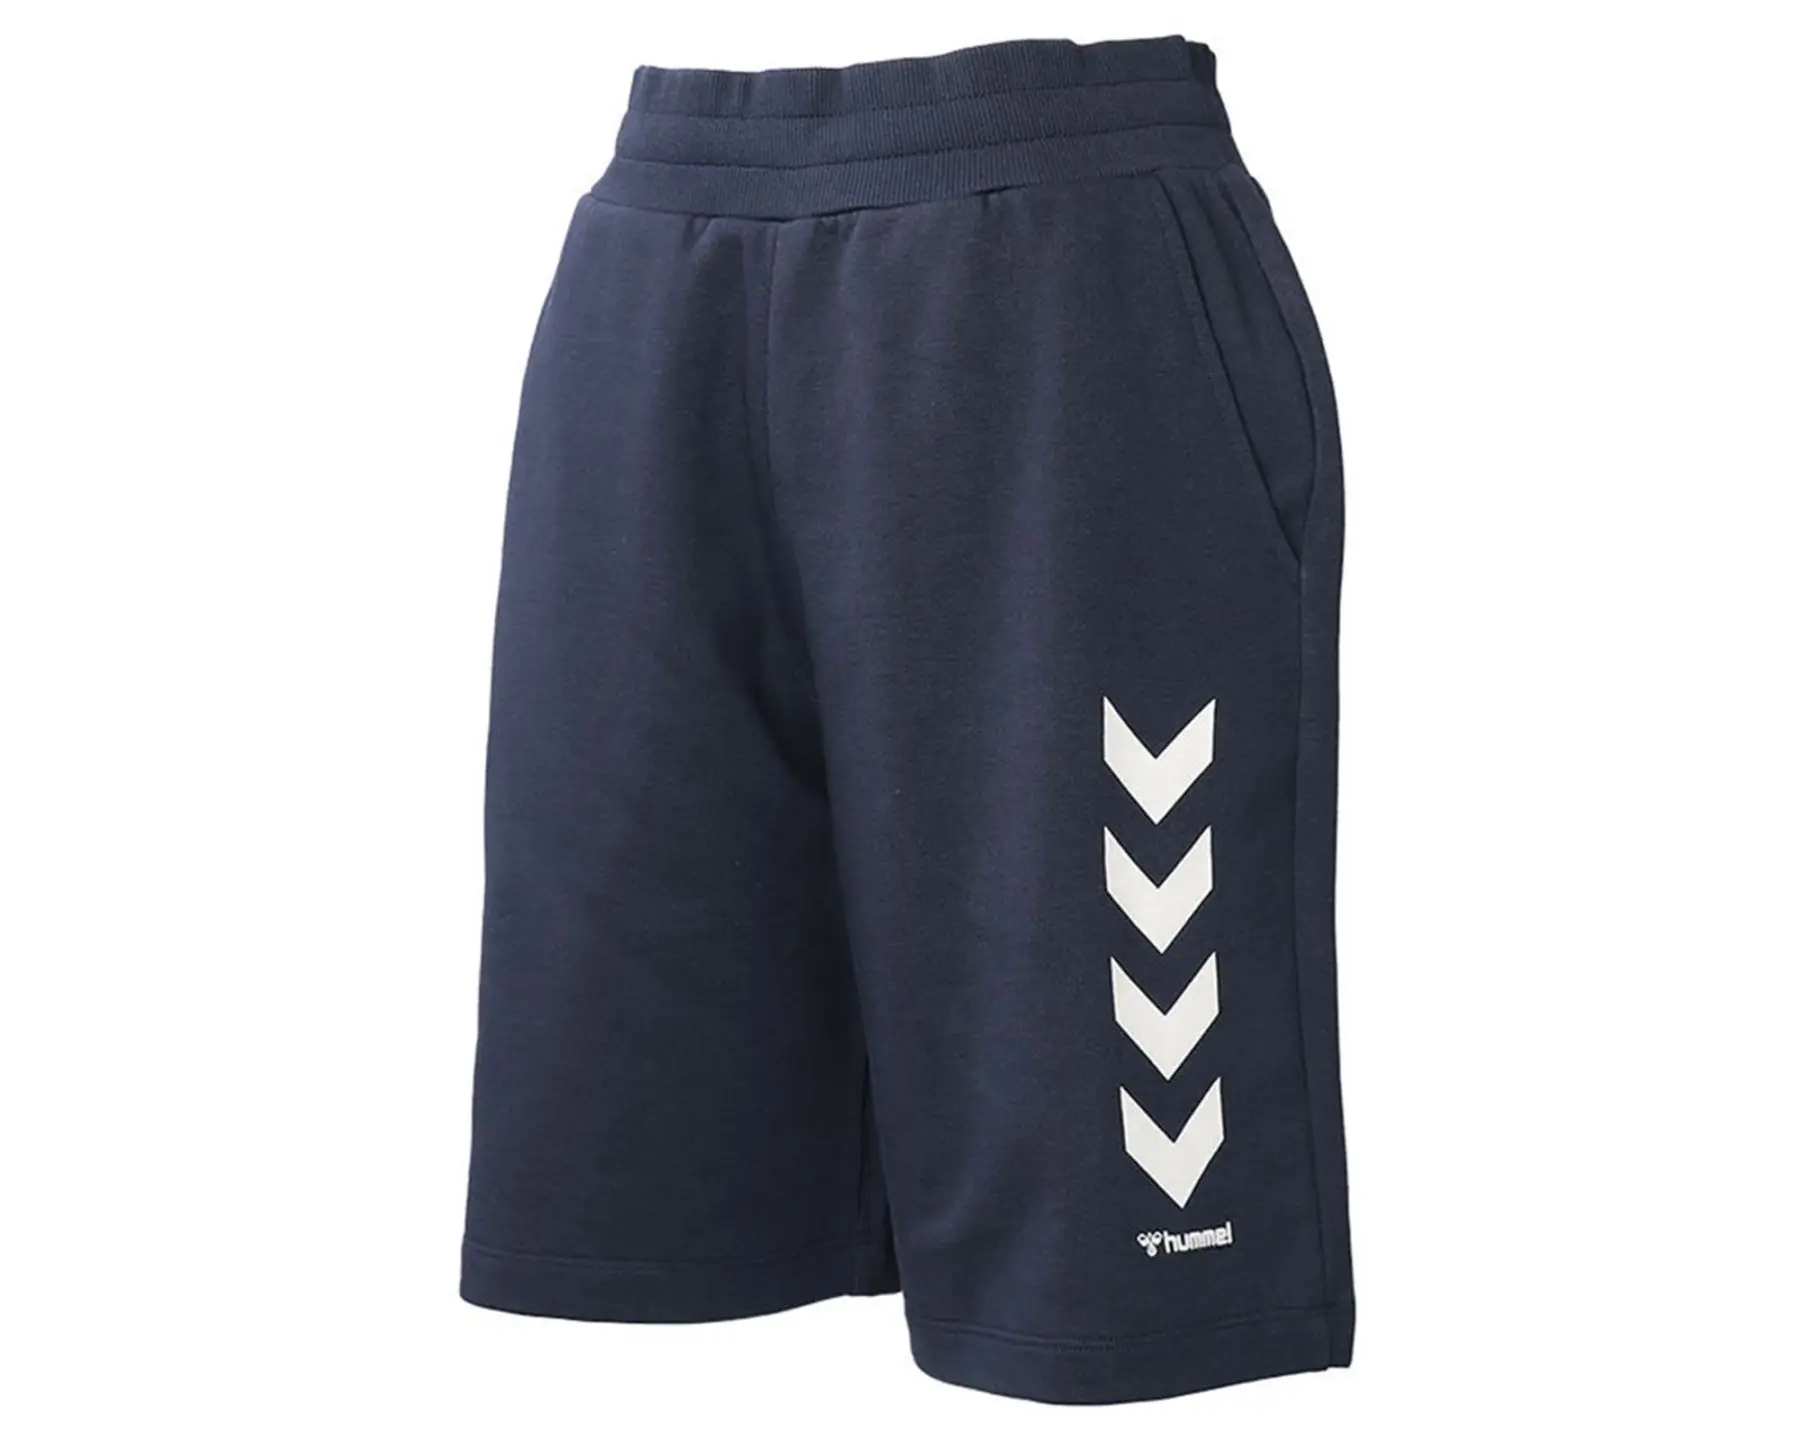 

Hummel Original men's Casual Shorts Navy Blue Color Comfortable Shorts for Sporty and Comfortable Walking Elastic Waist